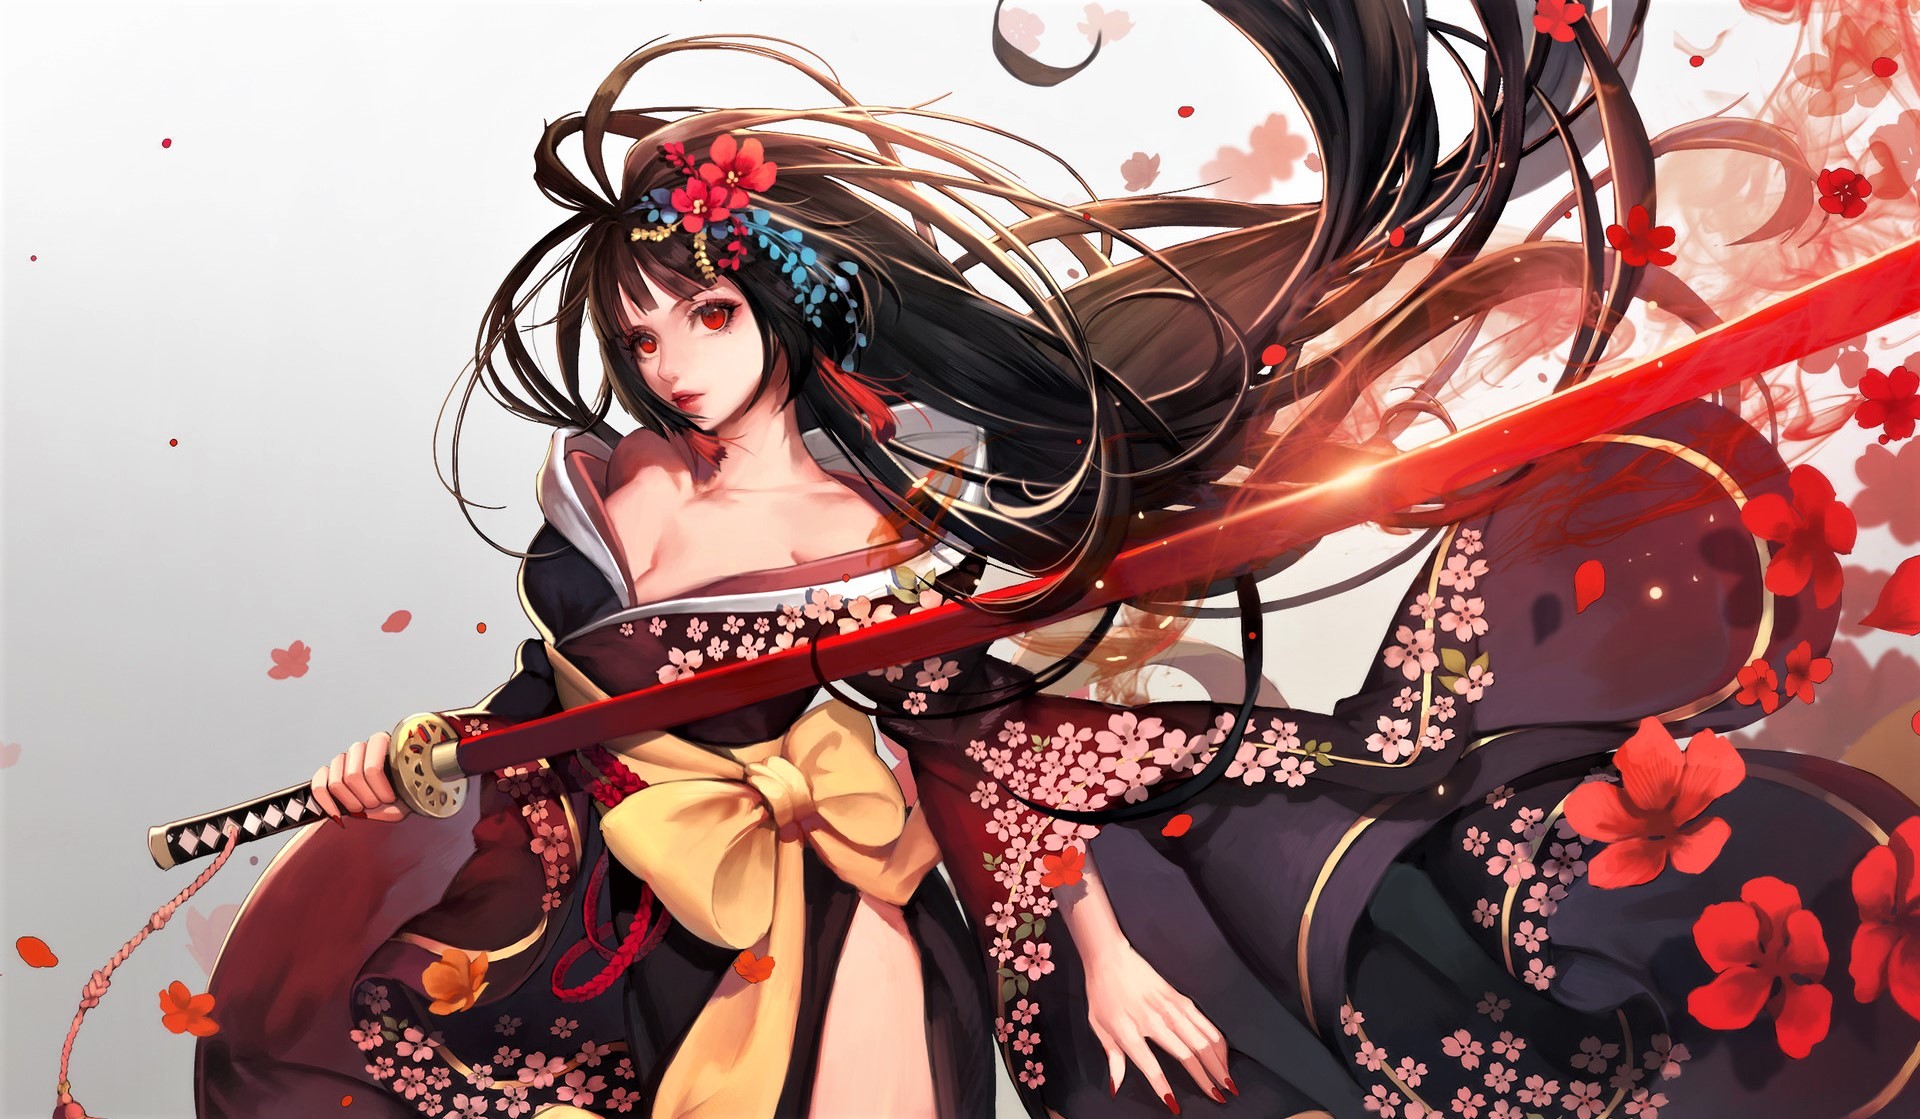 Anime Warrior Girl 1 by Feast4daBeast on DeviantArt